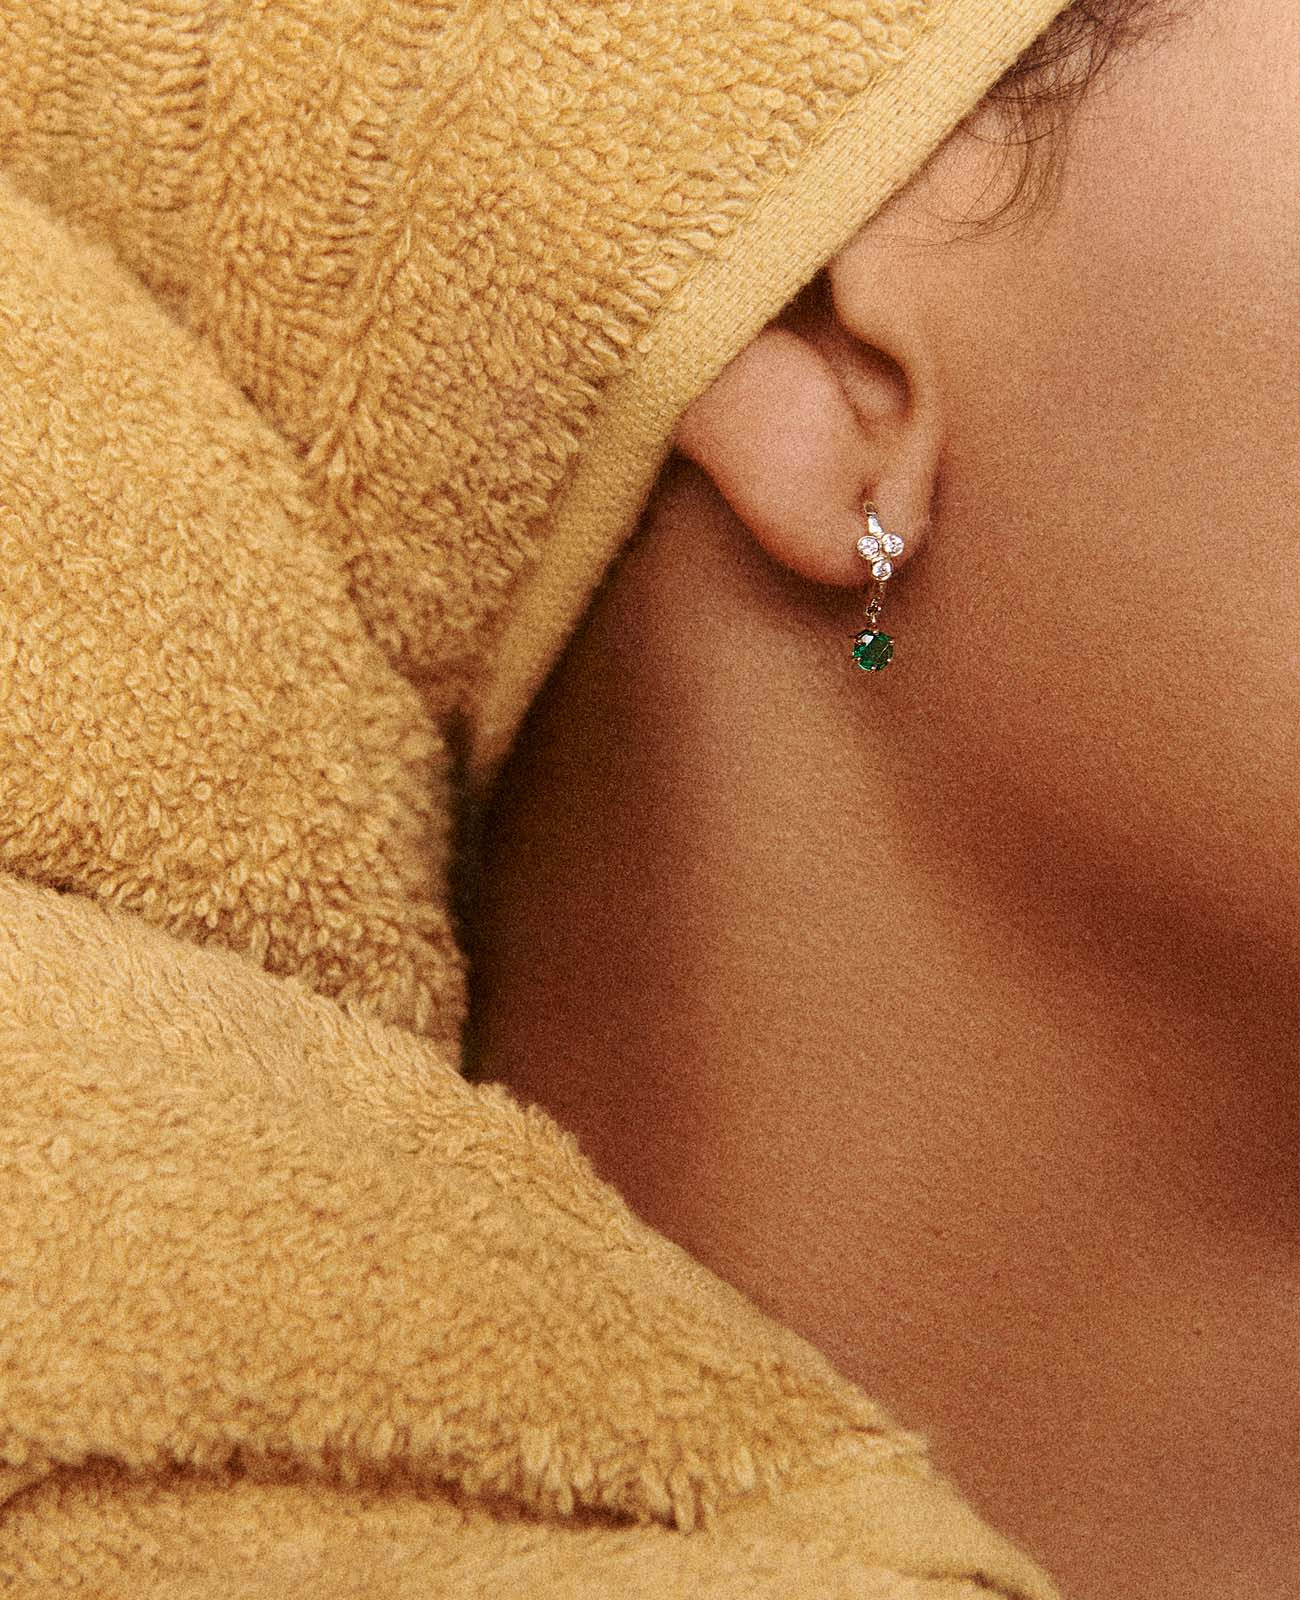 MIRA N°2 earring pascale monvoisin jewelry paris